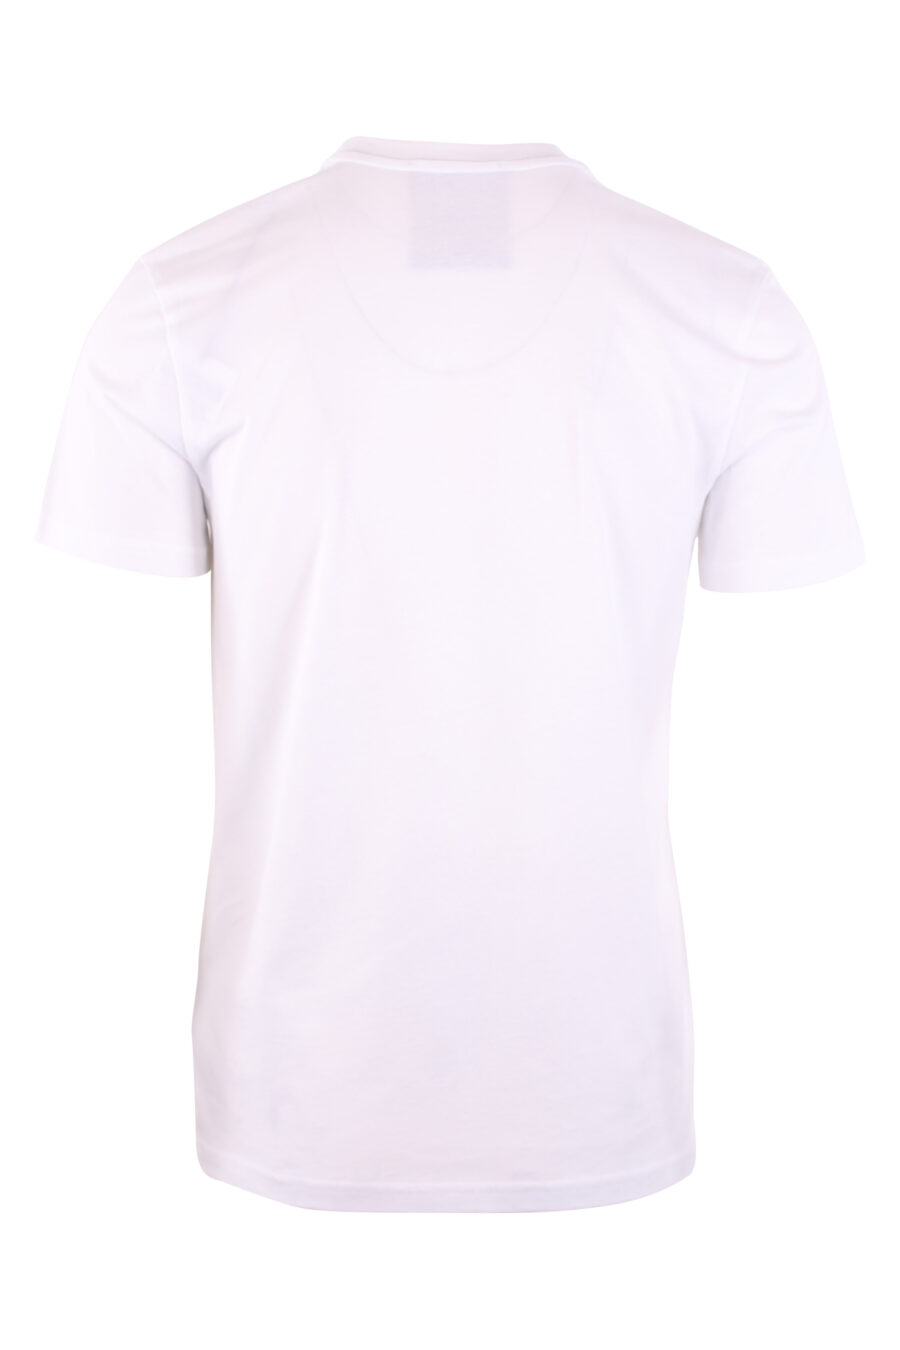 Camiseta blanca con logo milano "fantasy" - IMG 3127